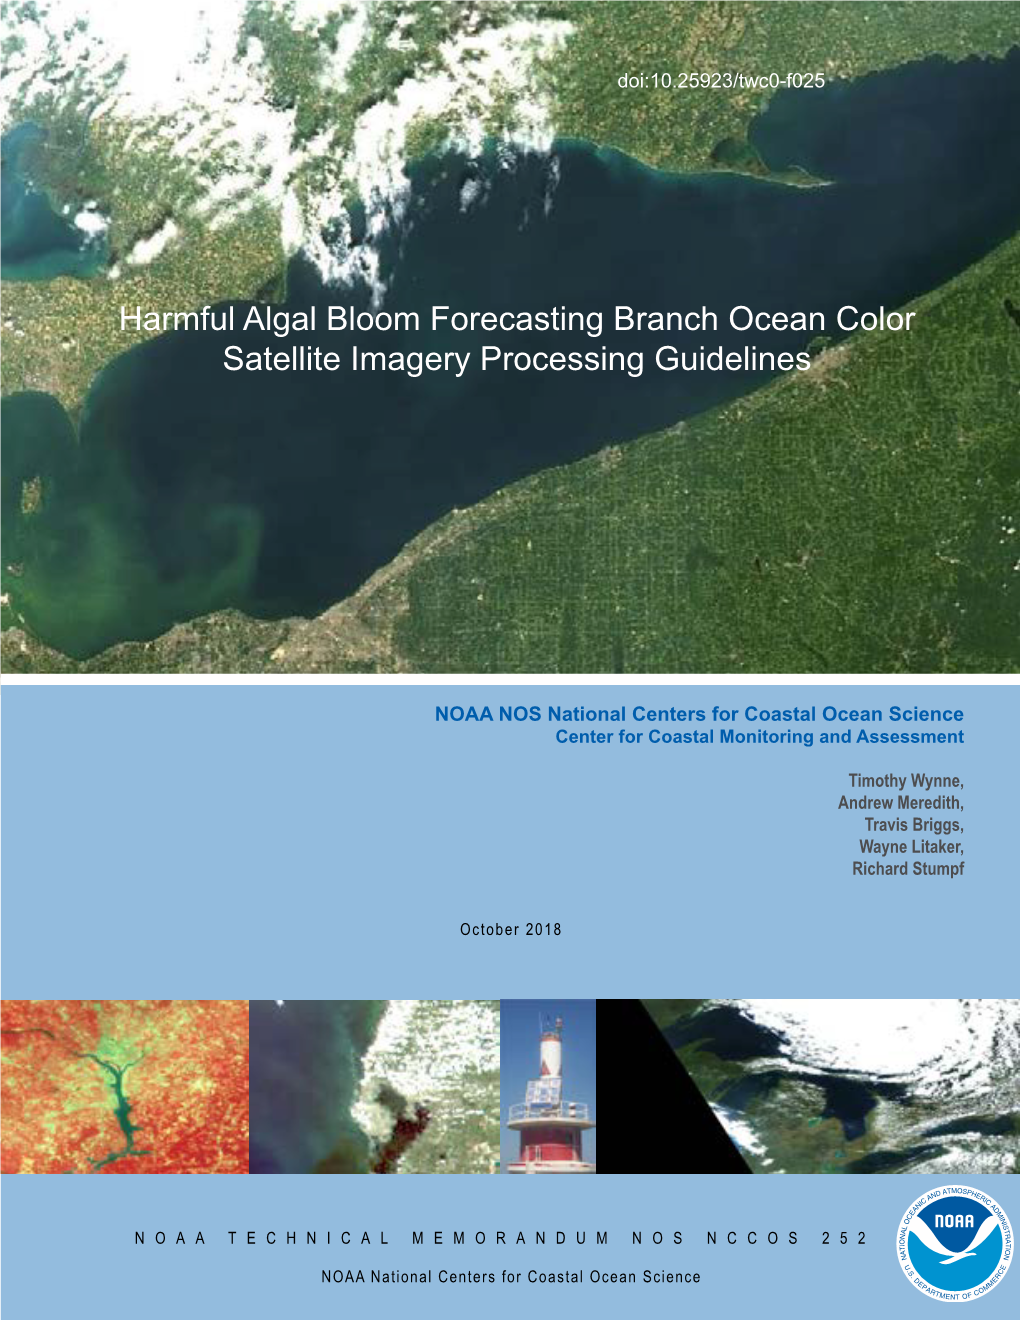 Harmful Algal Bloom Forecasting Branch Ocean Color Satellite Imagery Processing Guidelines